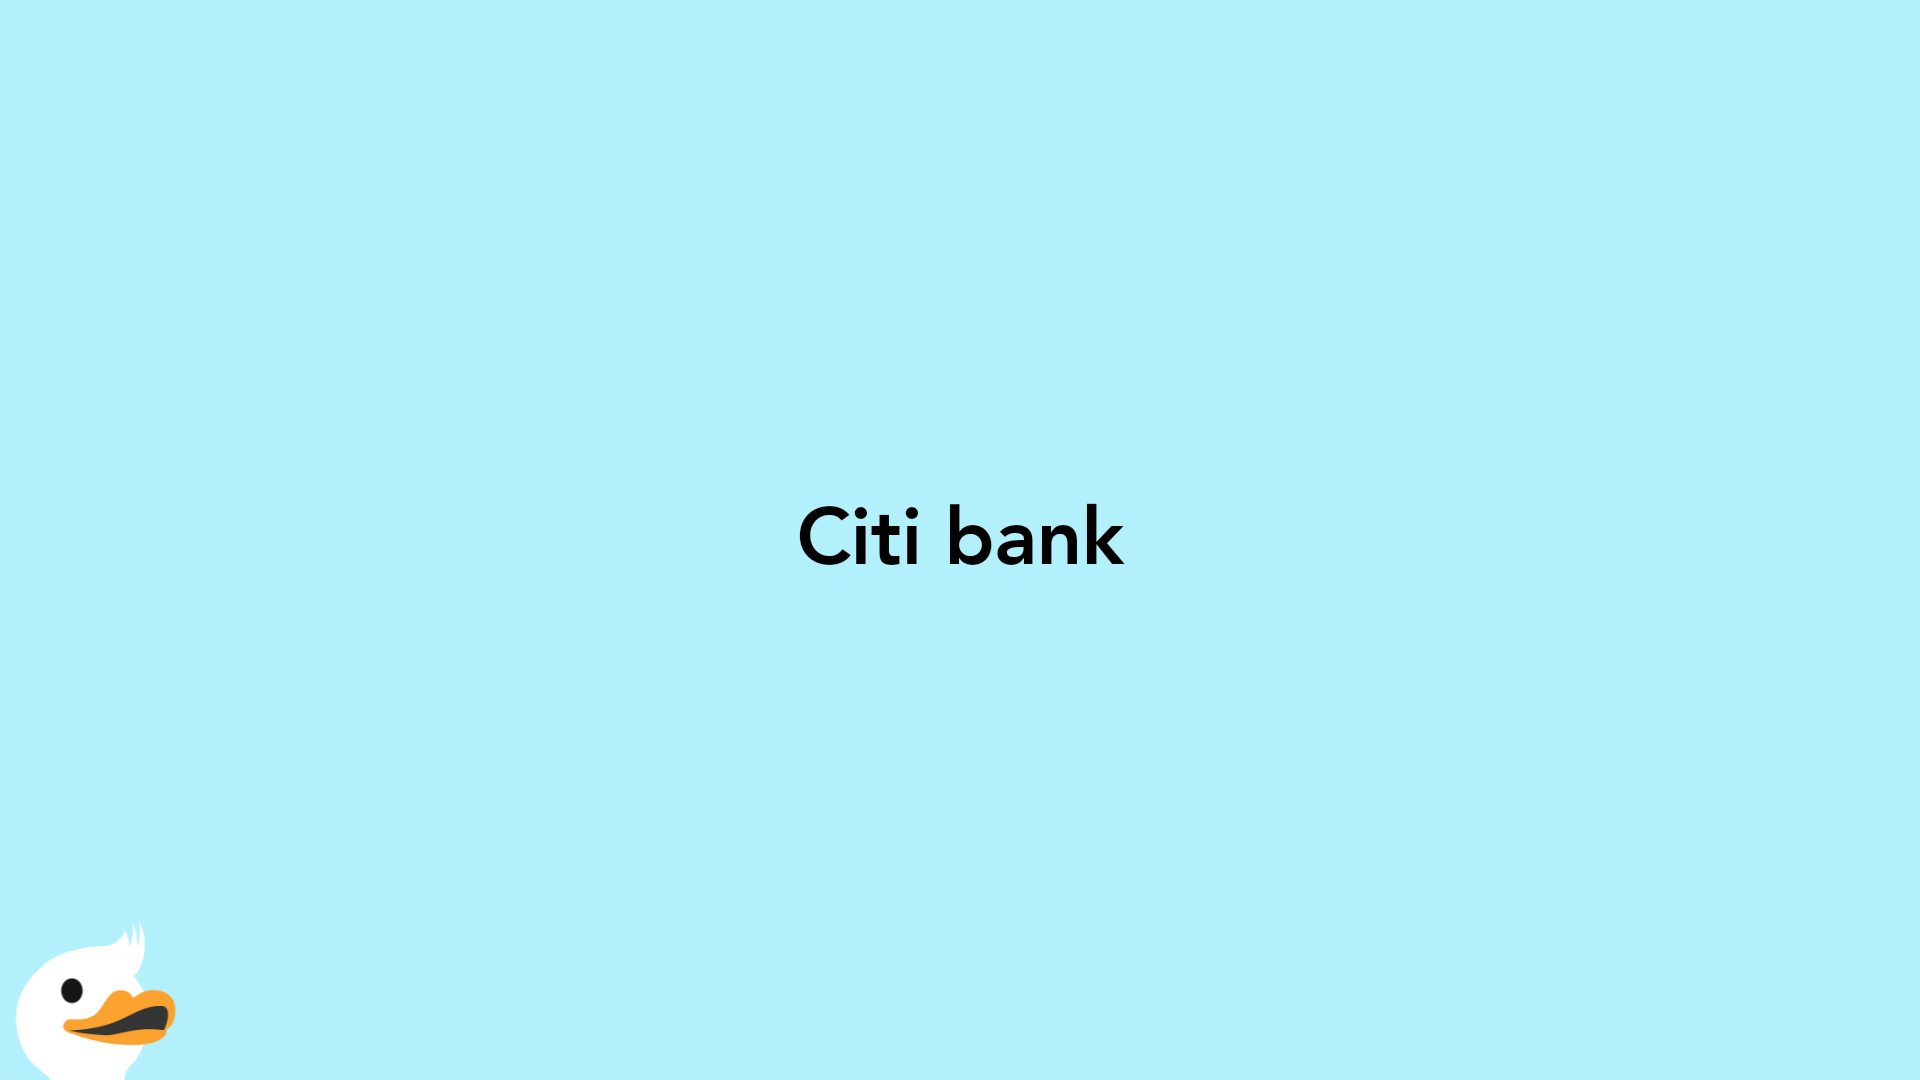 Citi bank